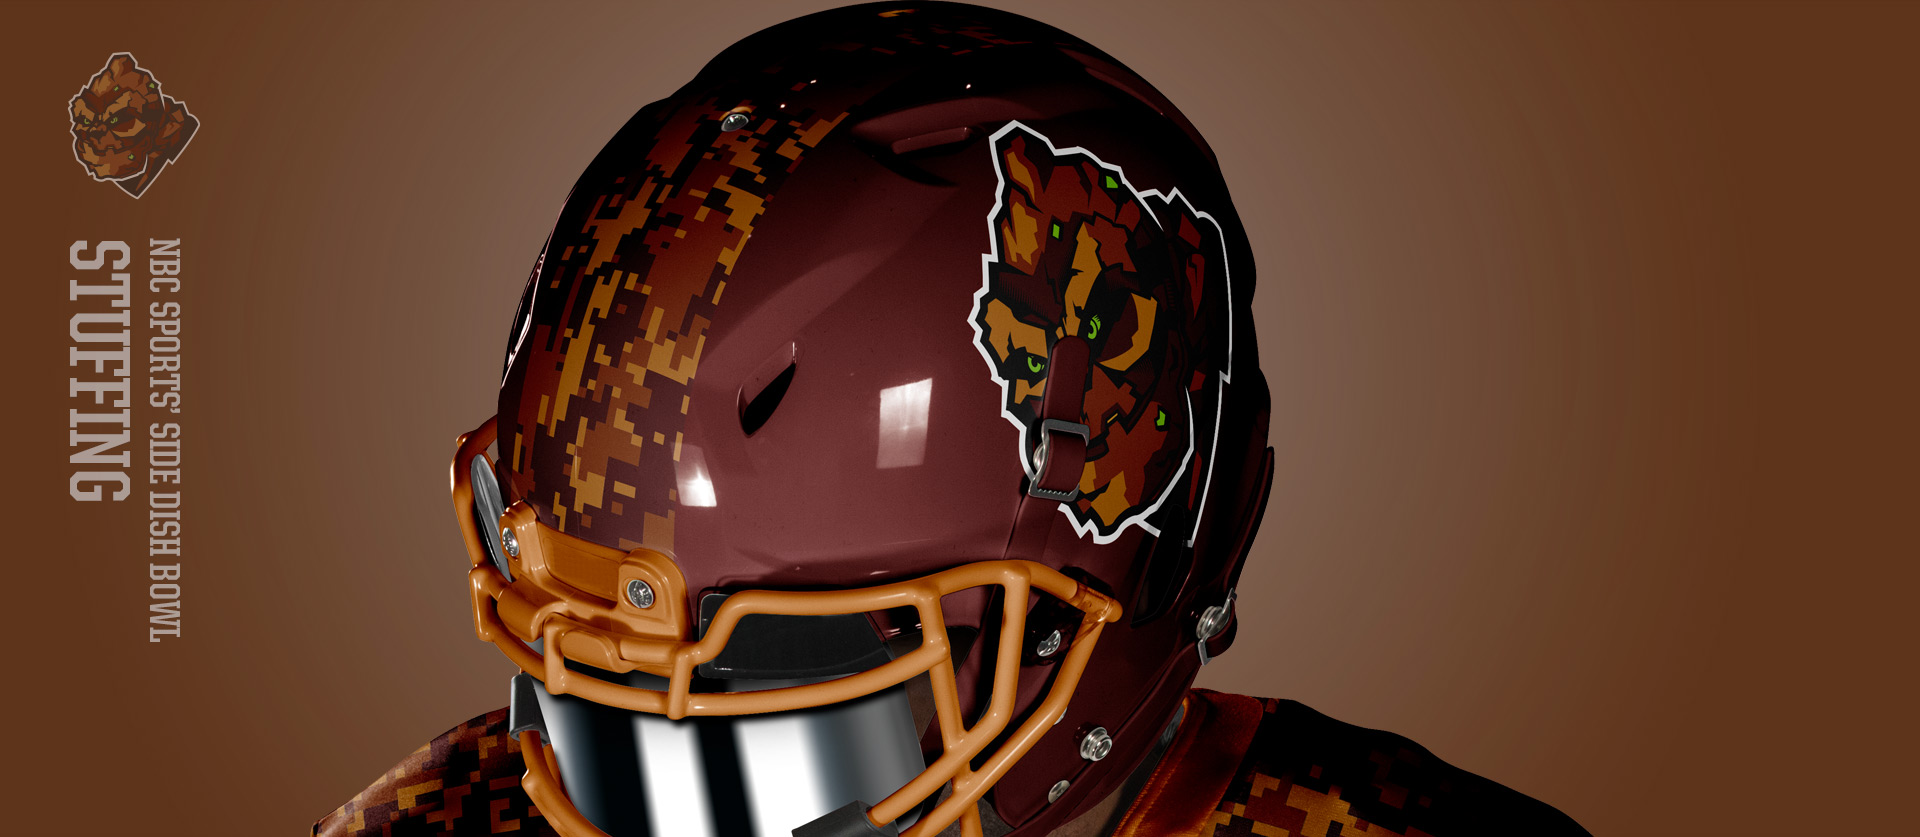 Stuffing Helmet Top View - Football Uniform Design for NBC Sports Thanksgiving Side Dish Bowl